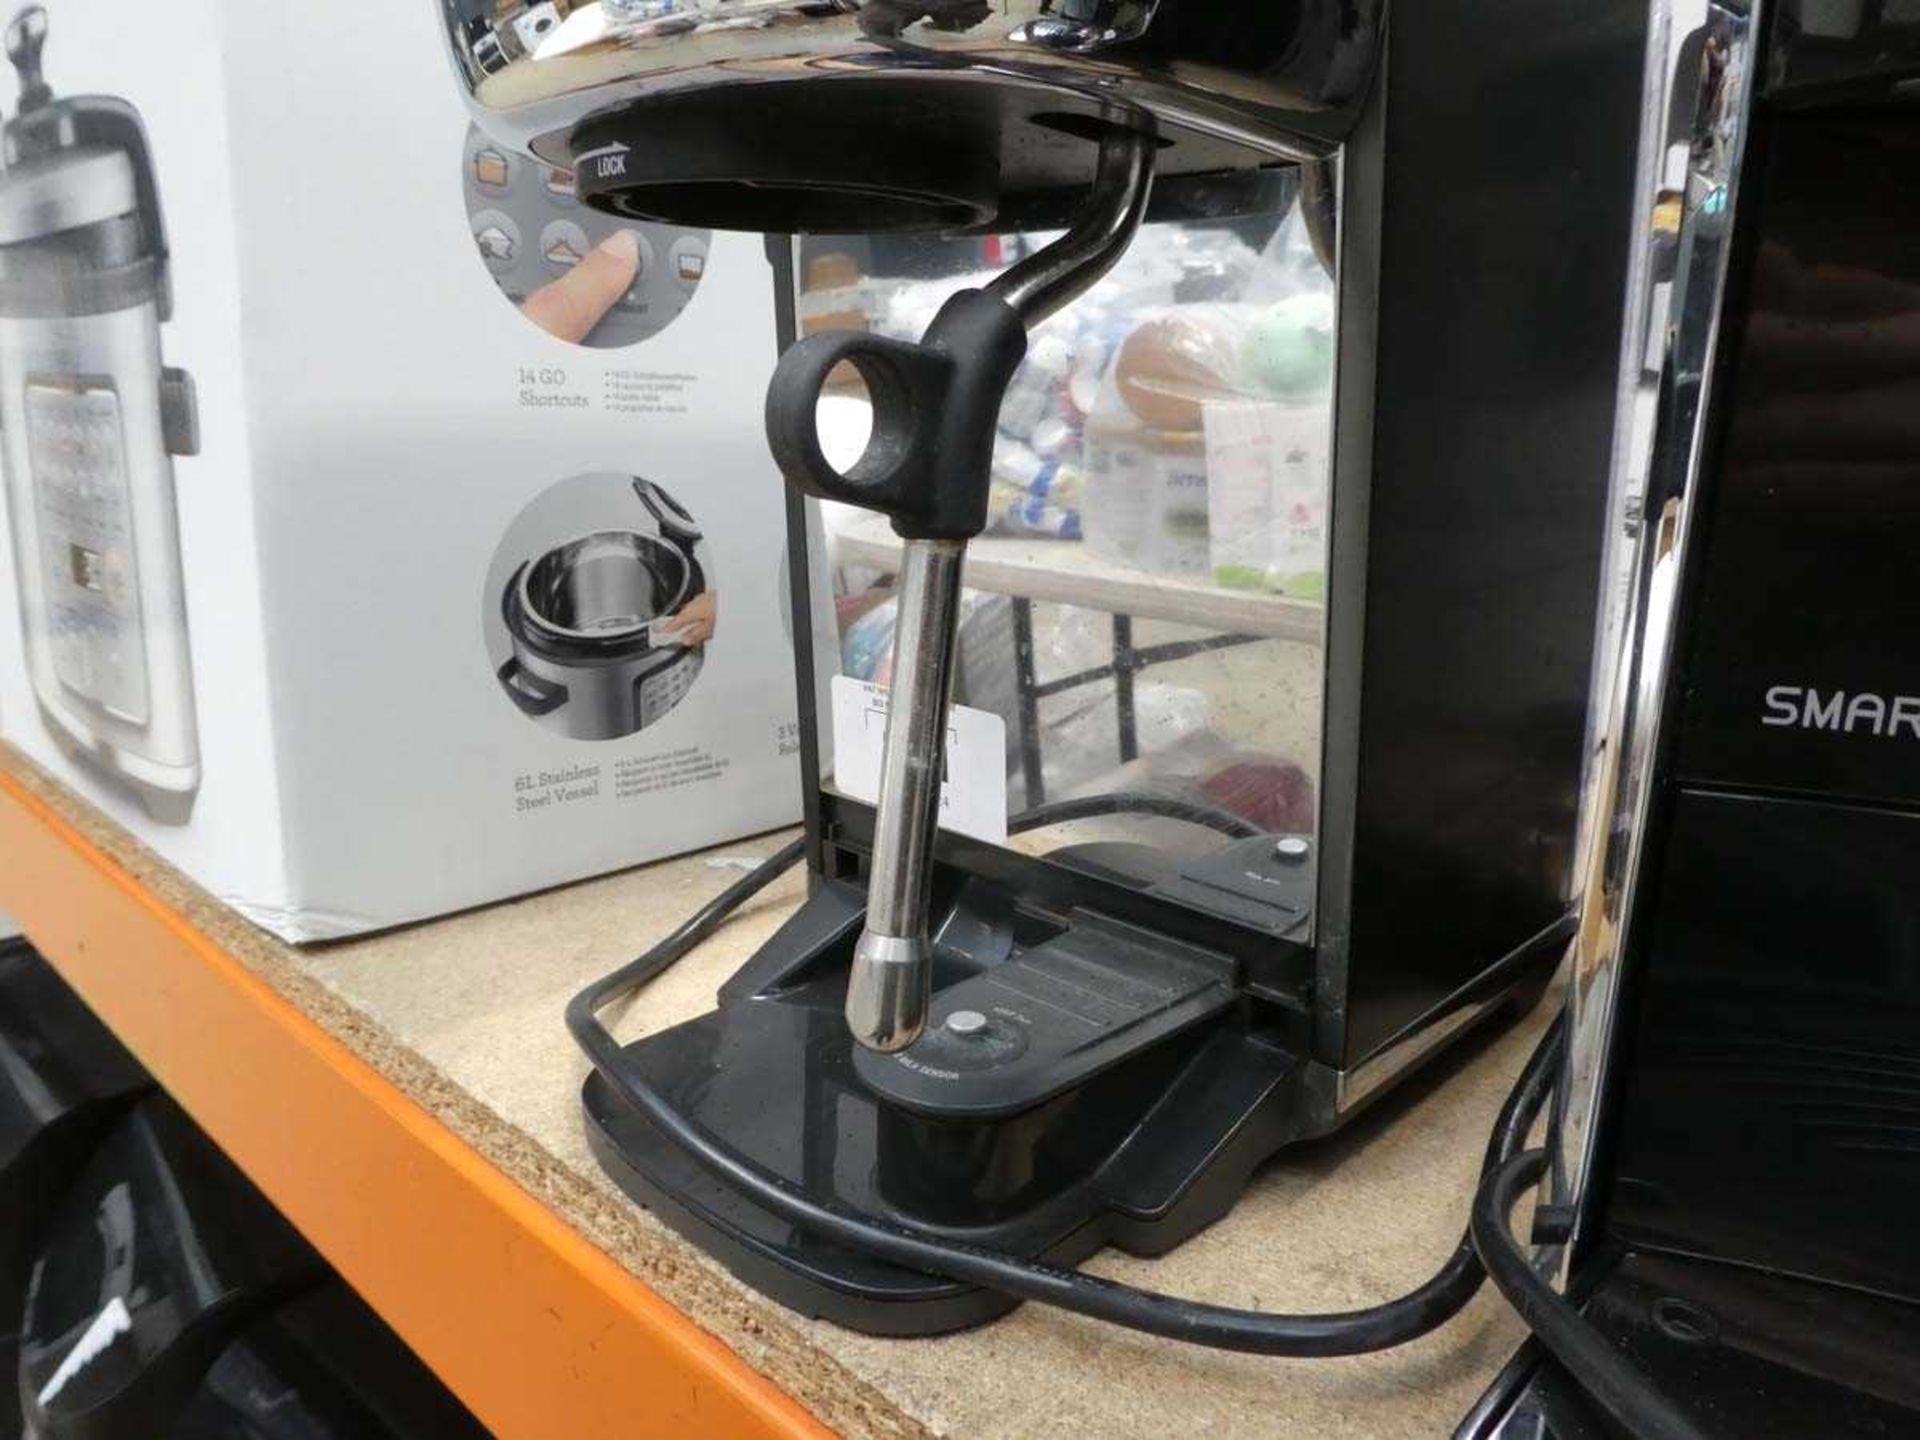 +VAT Unboxed Sage Bambino Plus coffee machine - Image 2 of 2